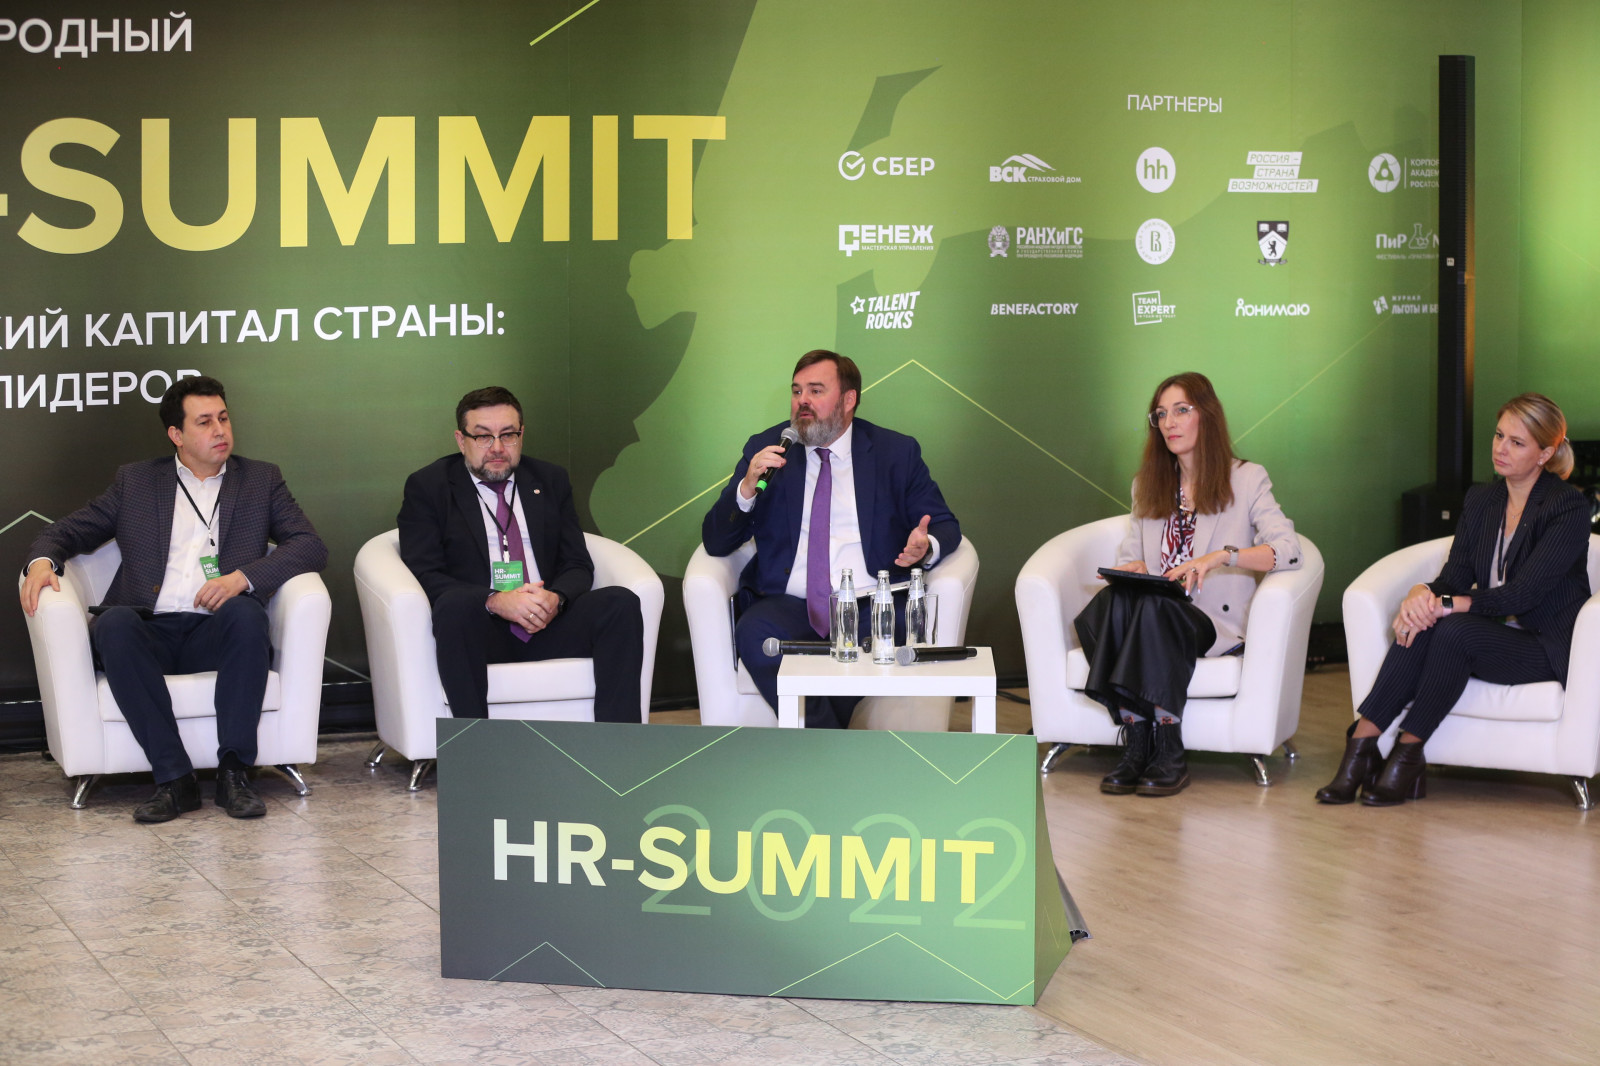 Саммит нижний. HR-саммит. Международный HR саммит Нижний Новгород. HR Summit купно. Выставка HR Summit.